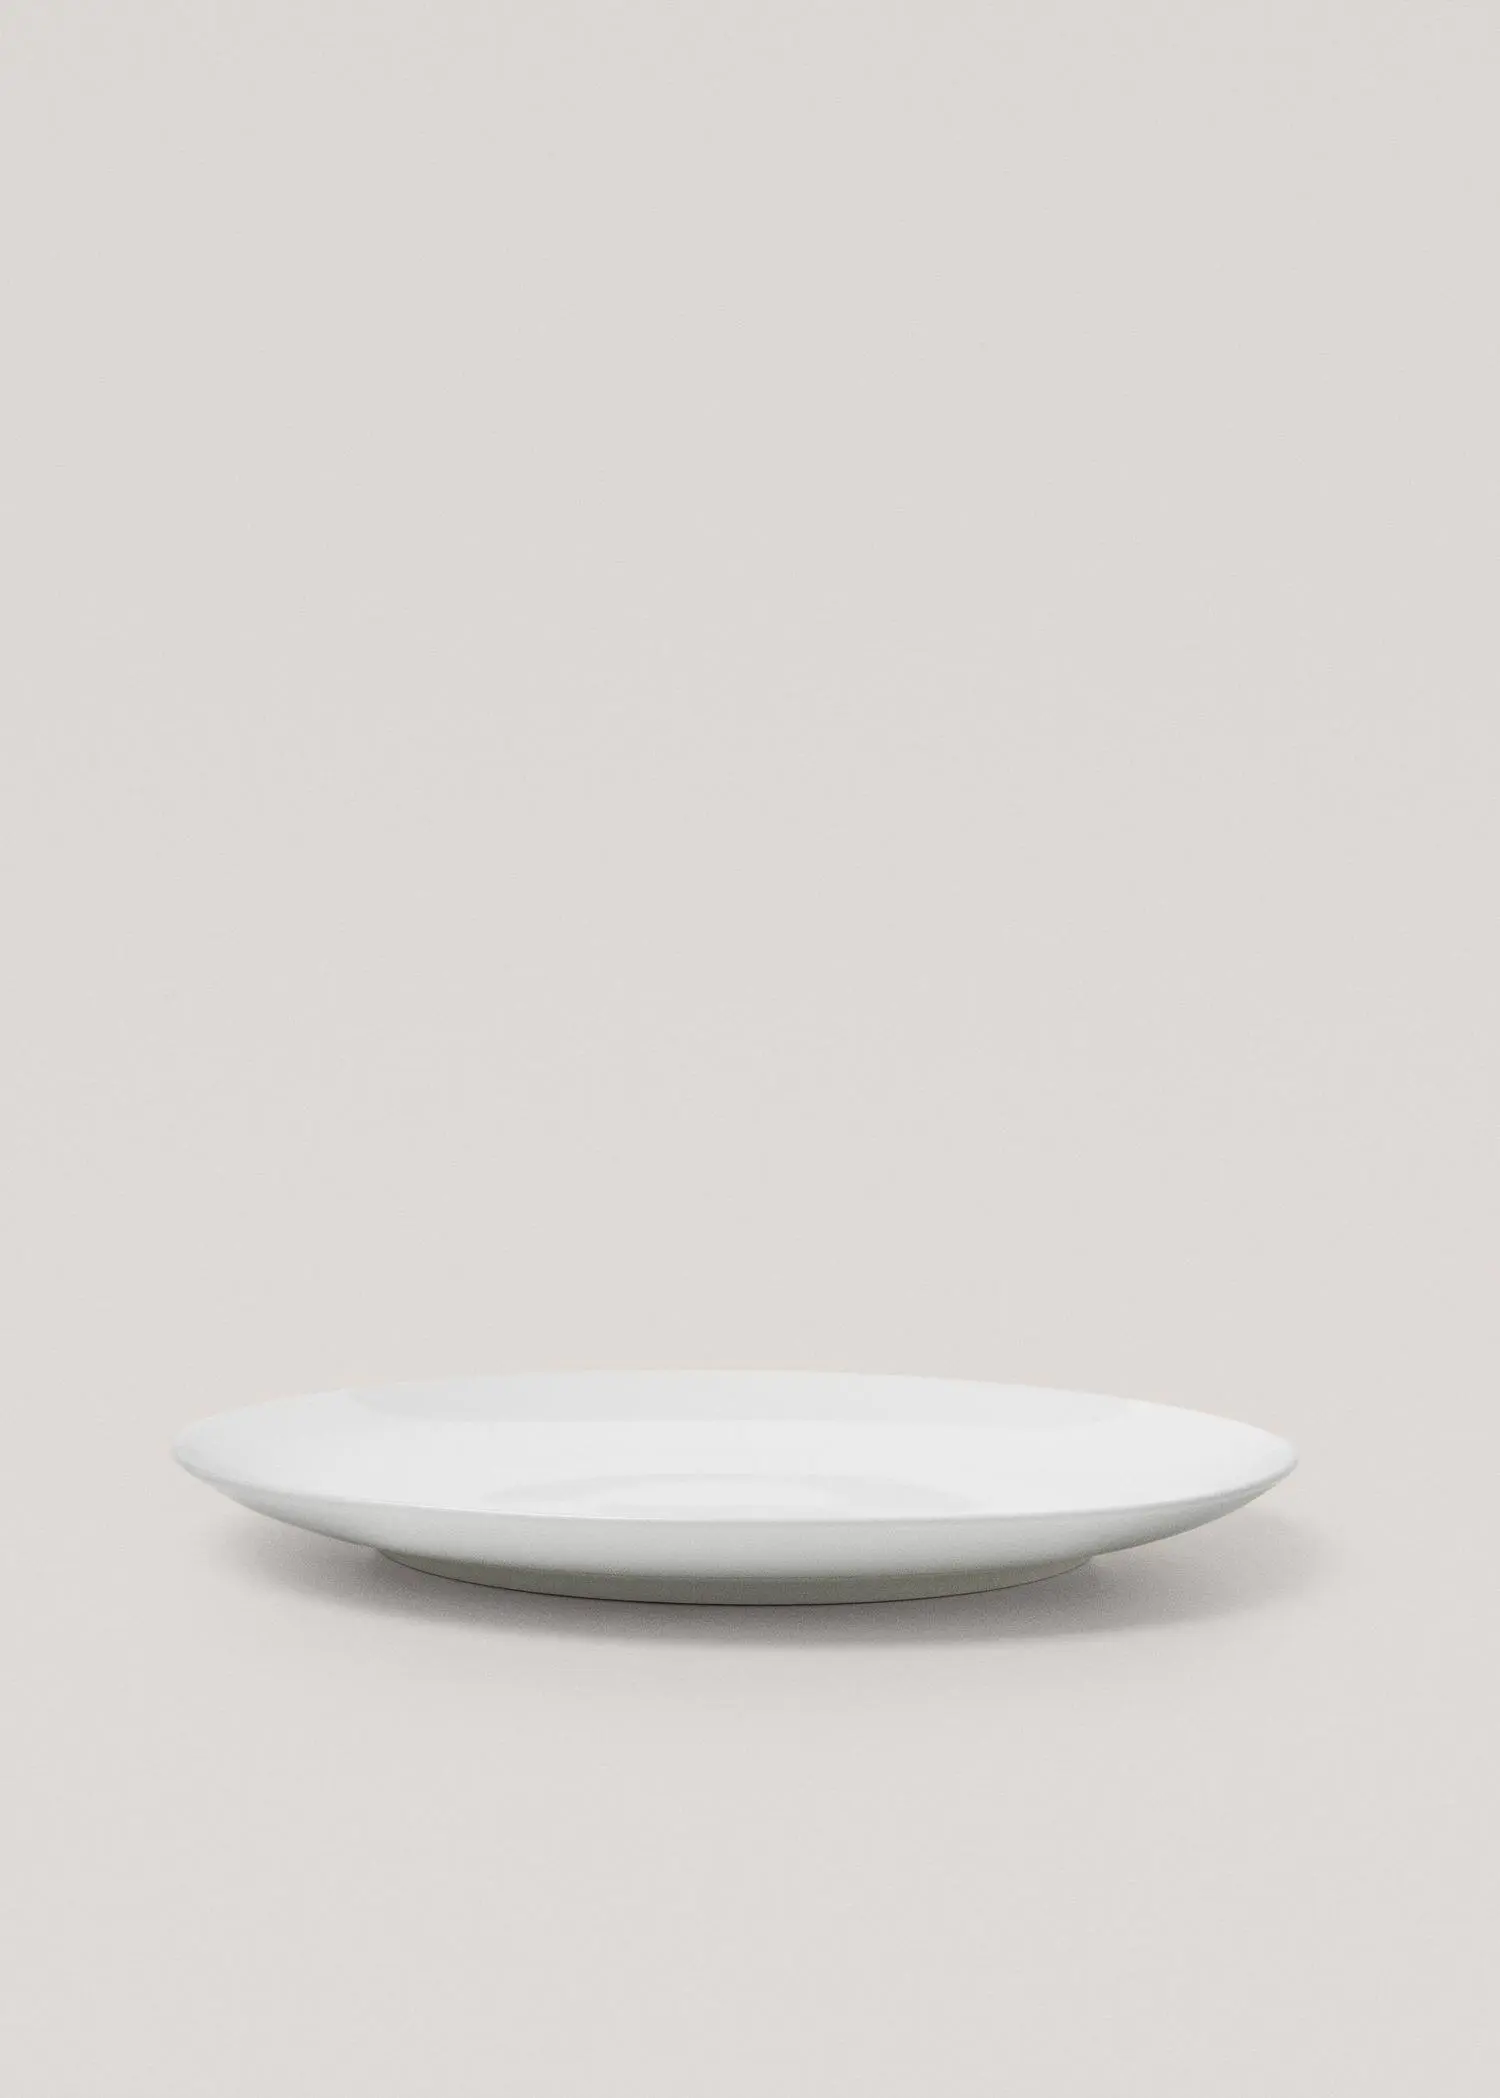 Mango Bone china porcelain flat plate. 2